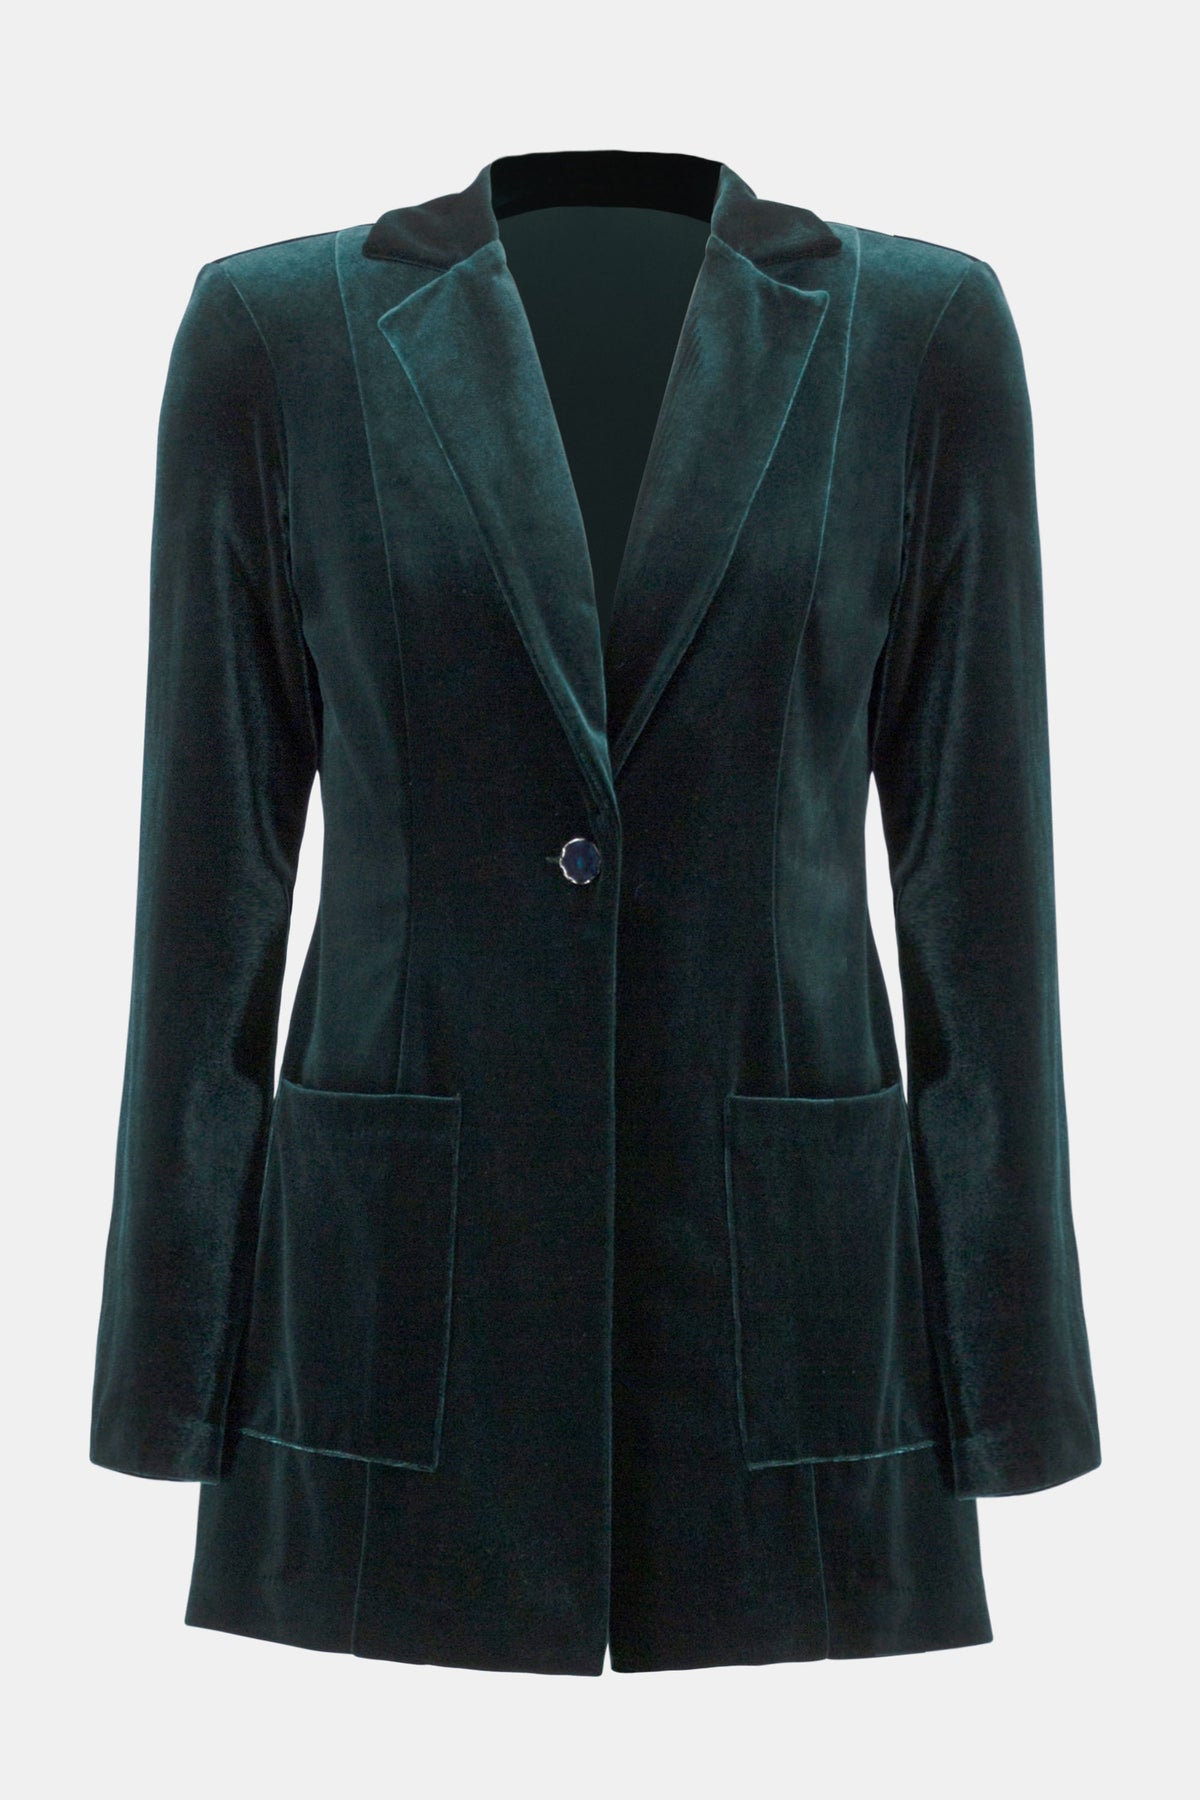 Joseph Ribkoff Stretch Velvet Blazer in Dark Green | Fashion for Full ...